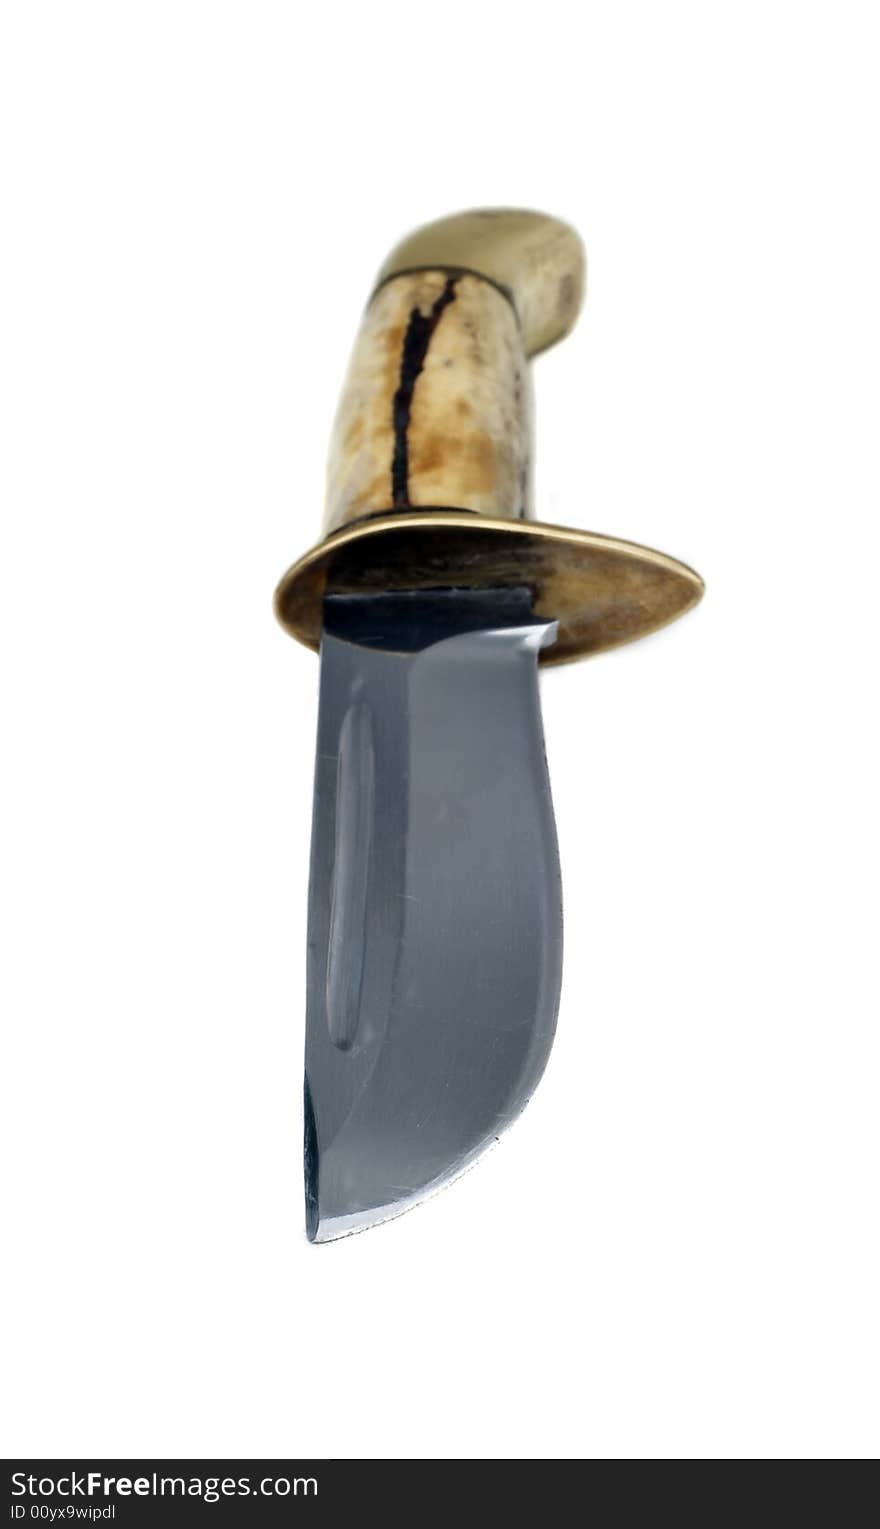 Handmade hunting knife with bone handle. Handmade hunting knife with bone handle